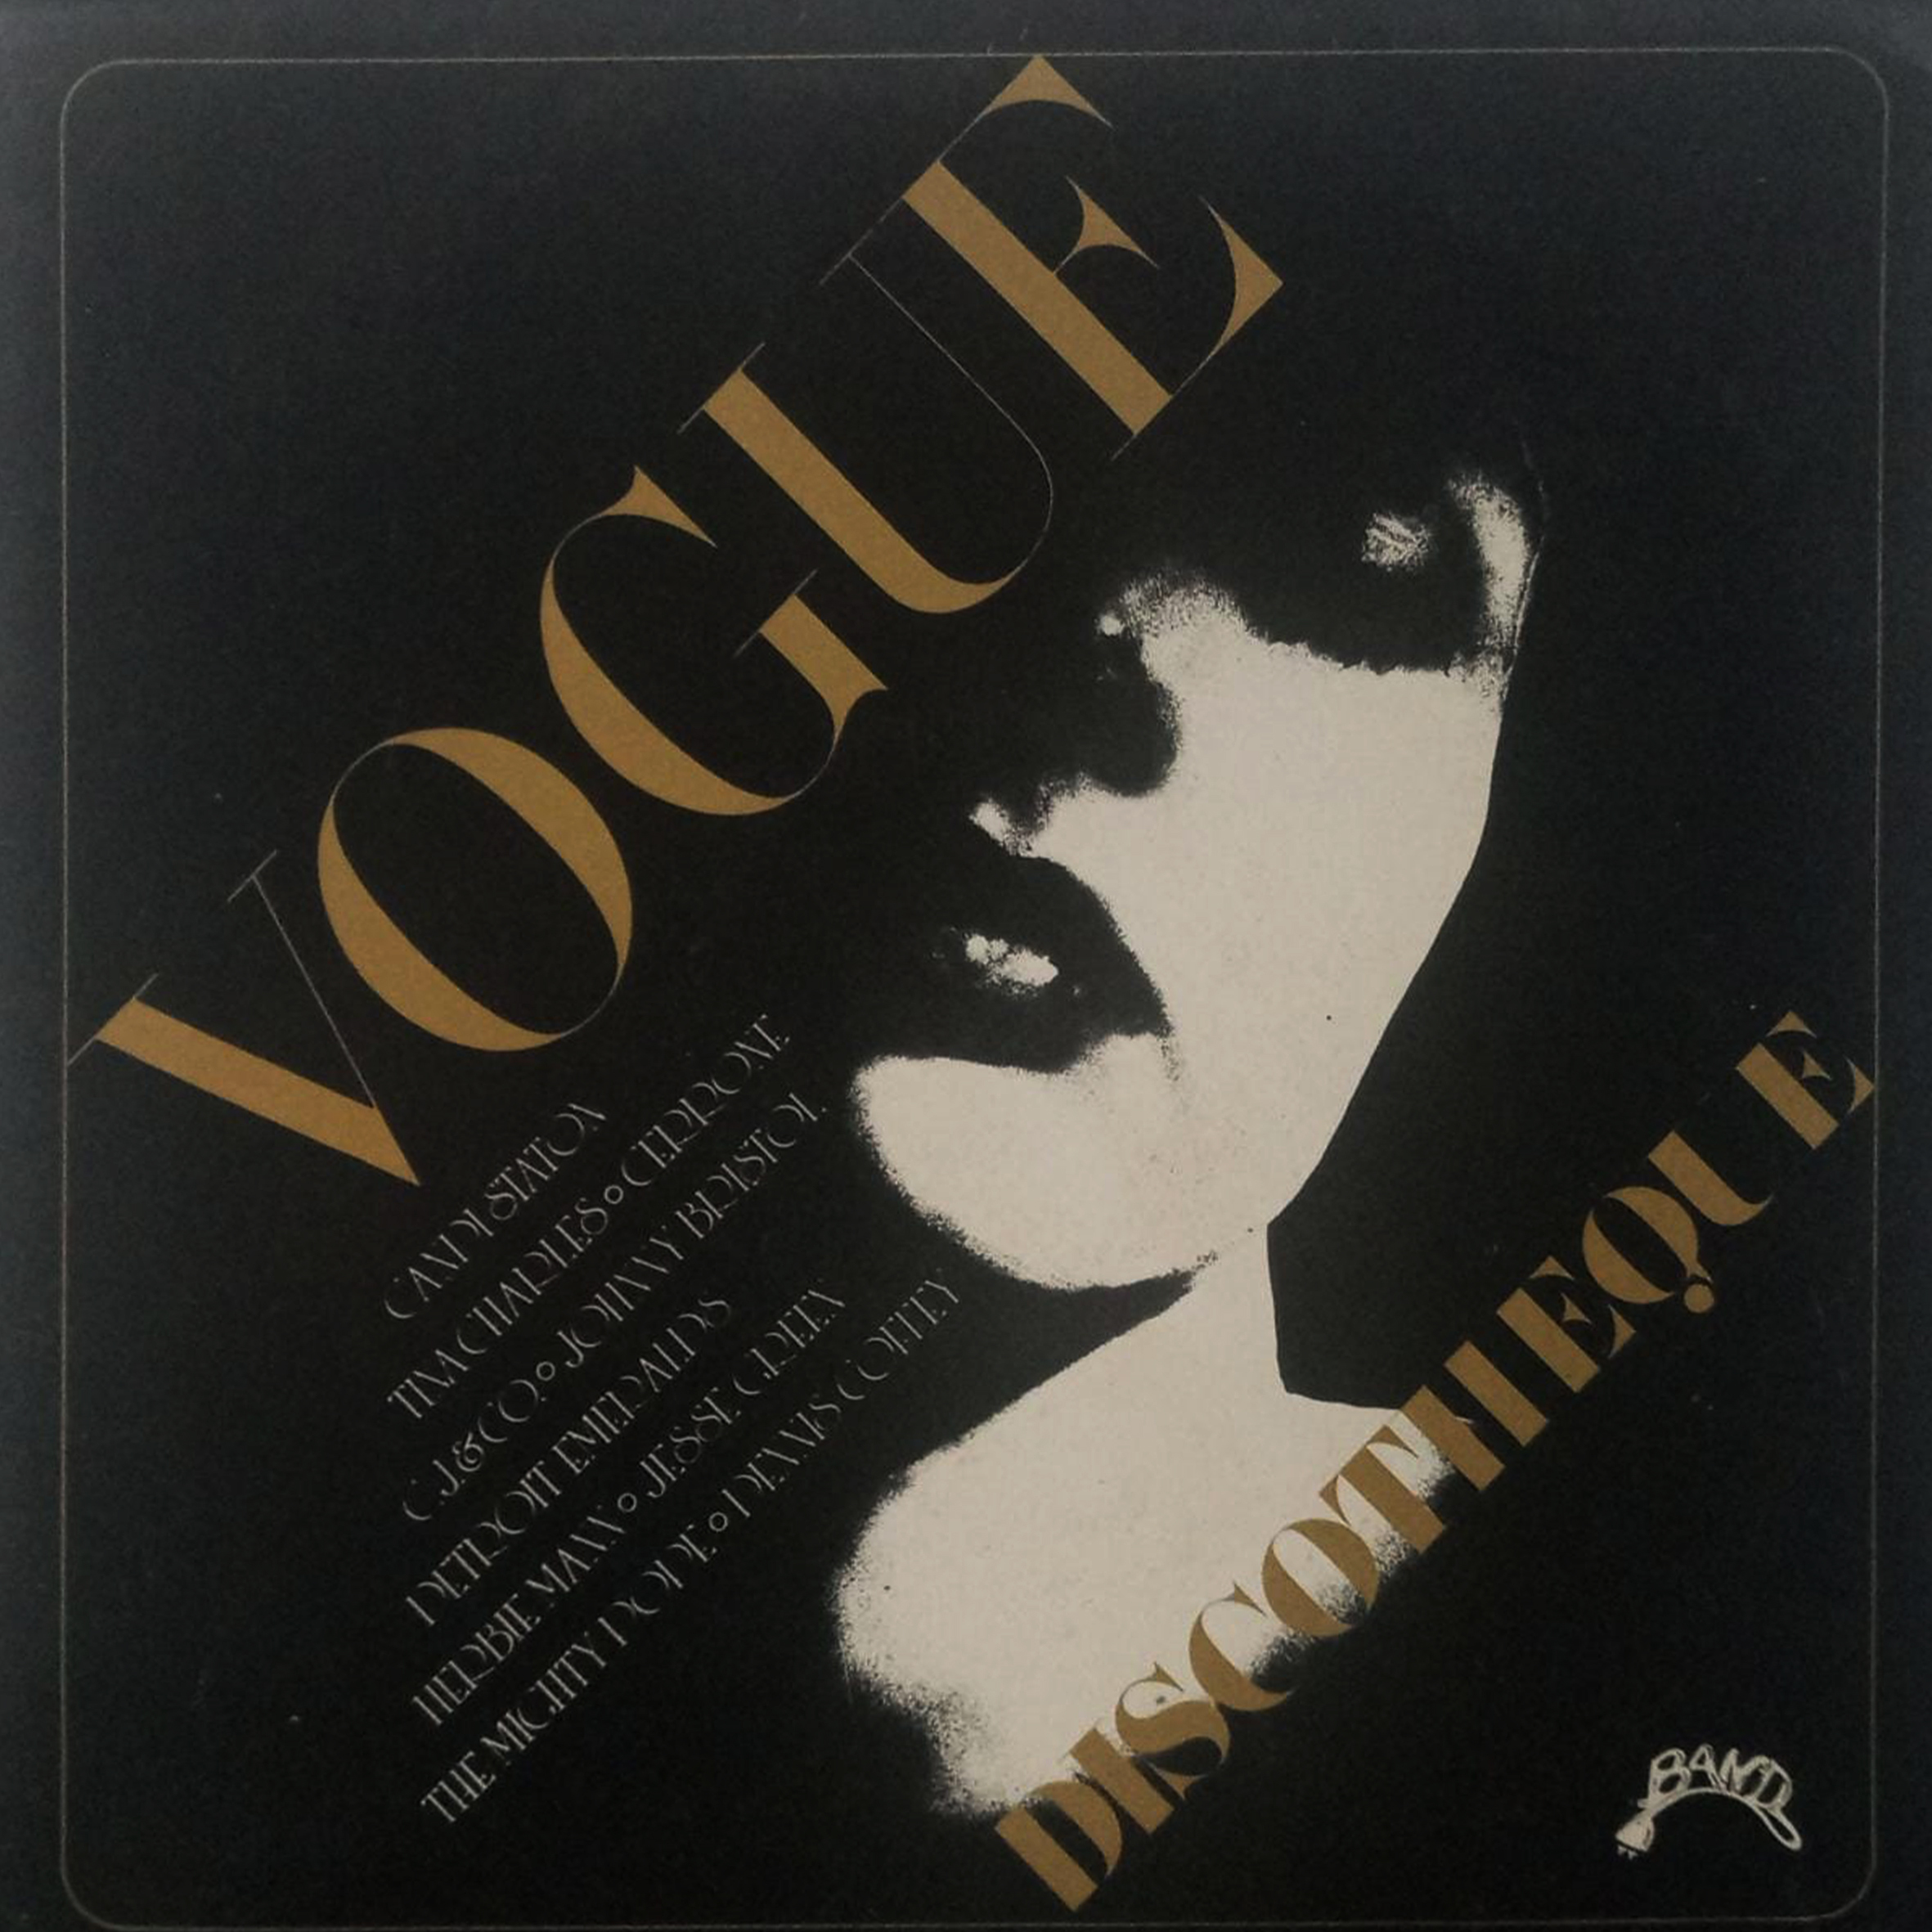 Vinil - Vogue Discotheque